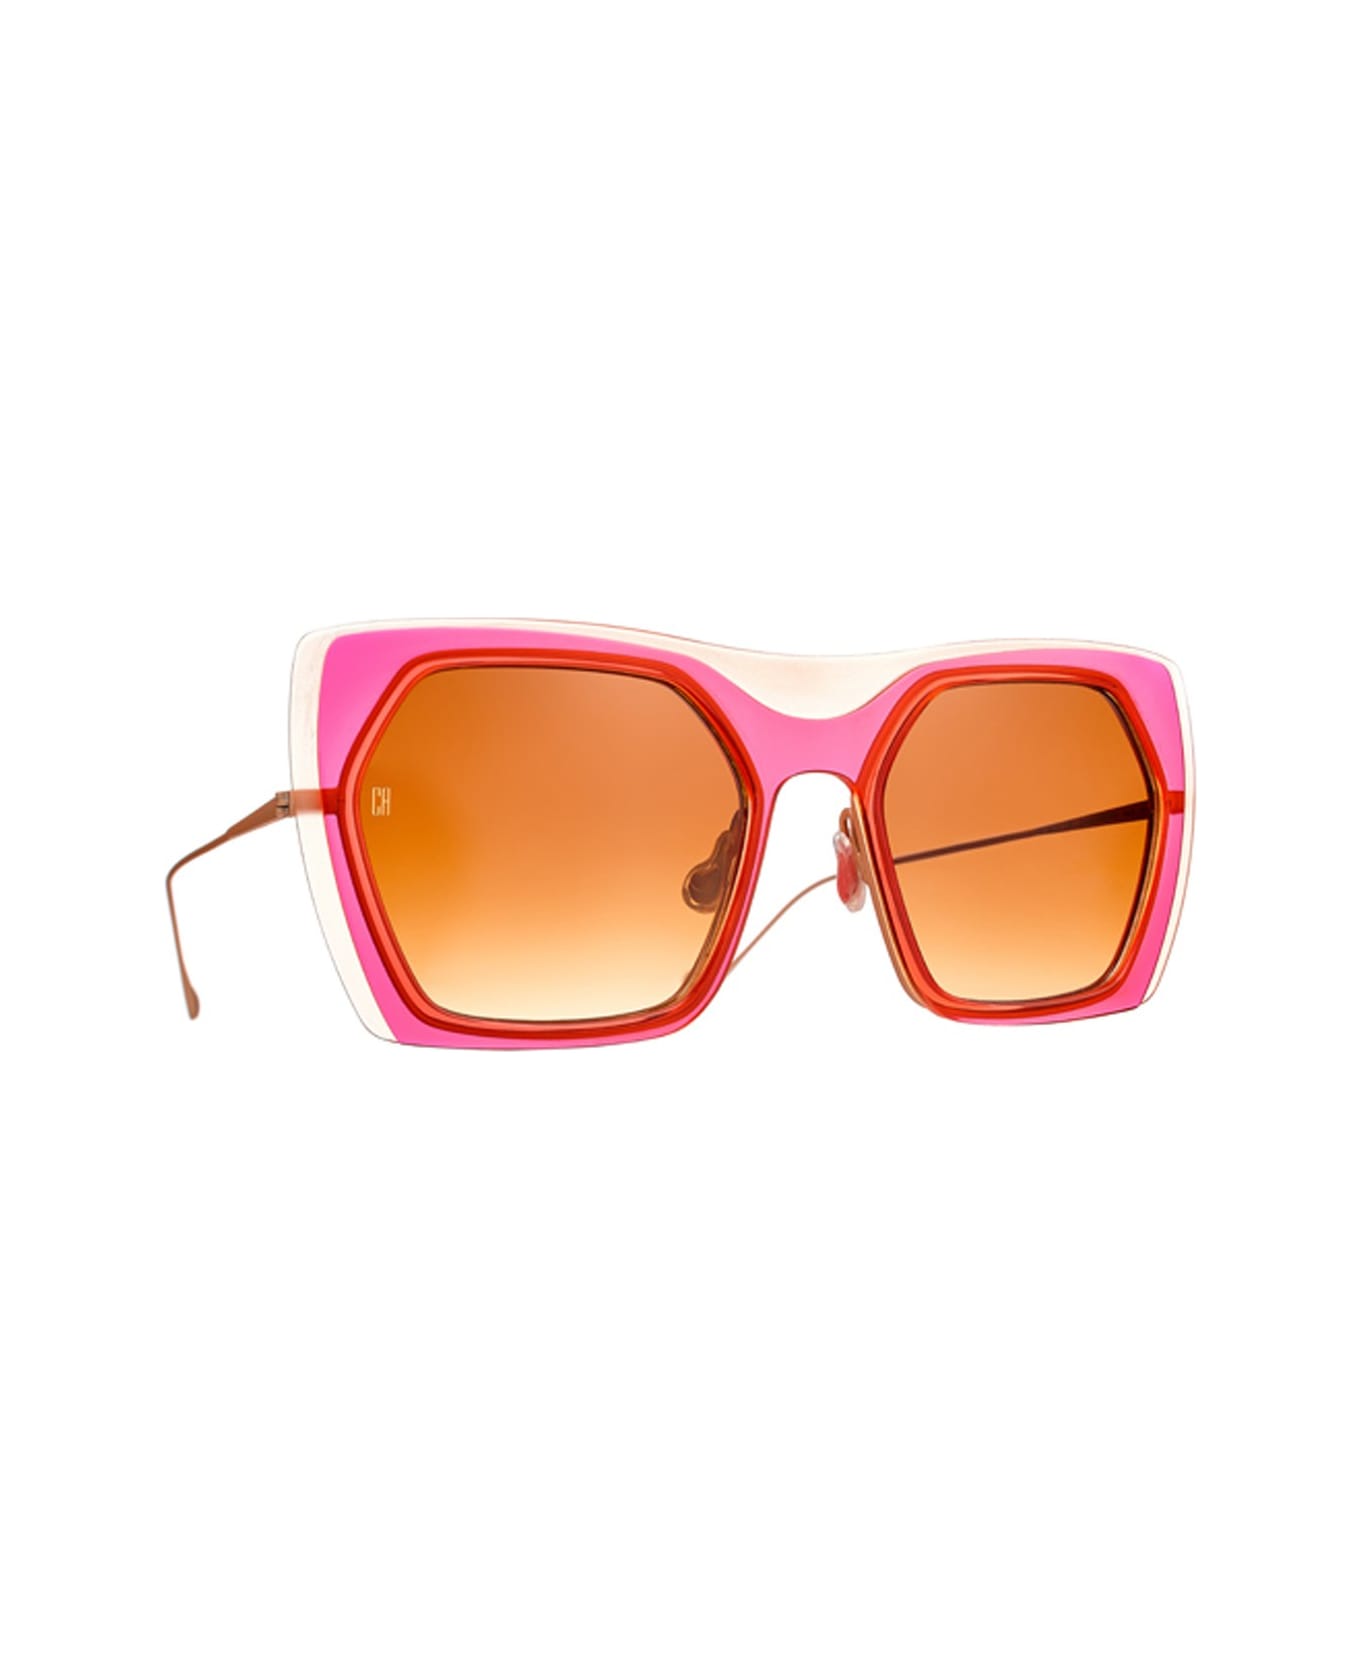 Caroline Abram Dangereuse Sunglasses - Multicolore